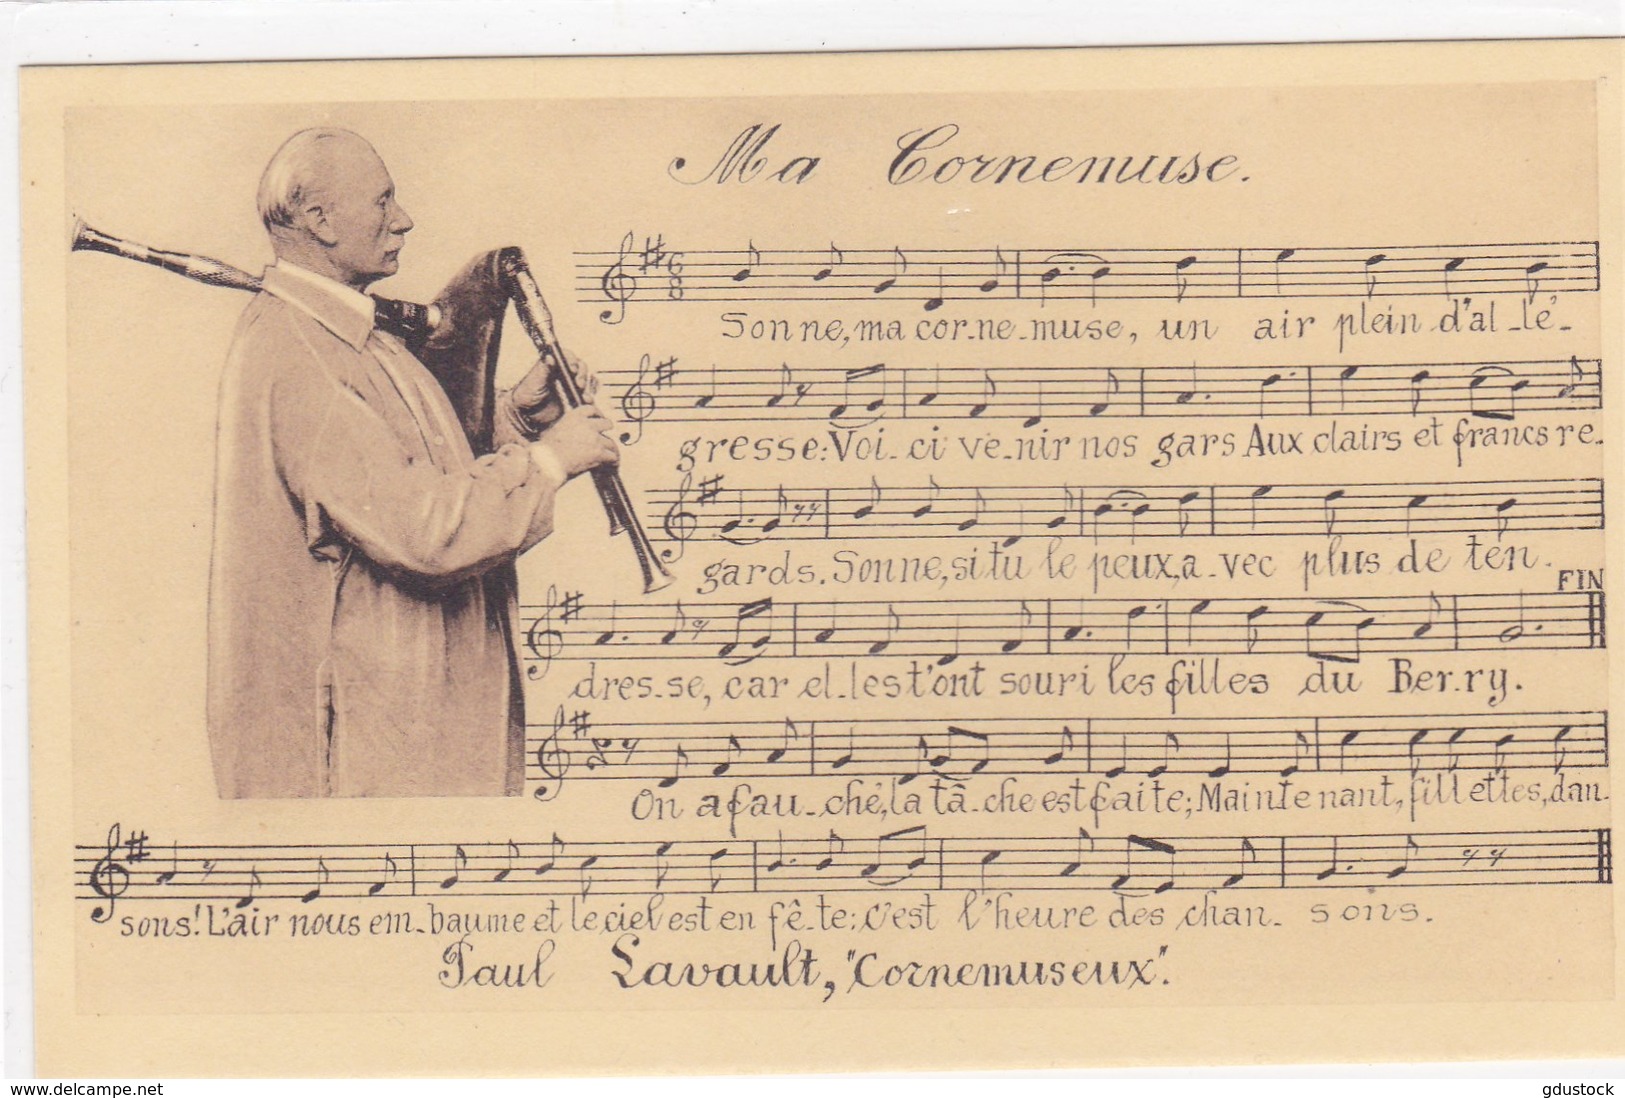 Ma Cornemuse - Paul Lavault, "Cornemuseux" - Musique